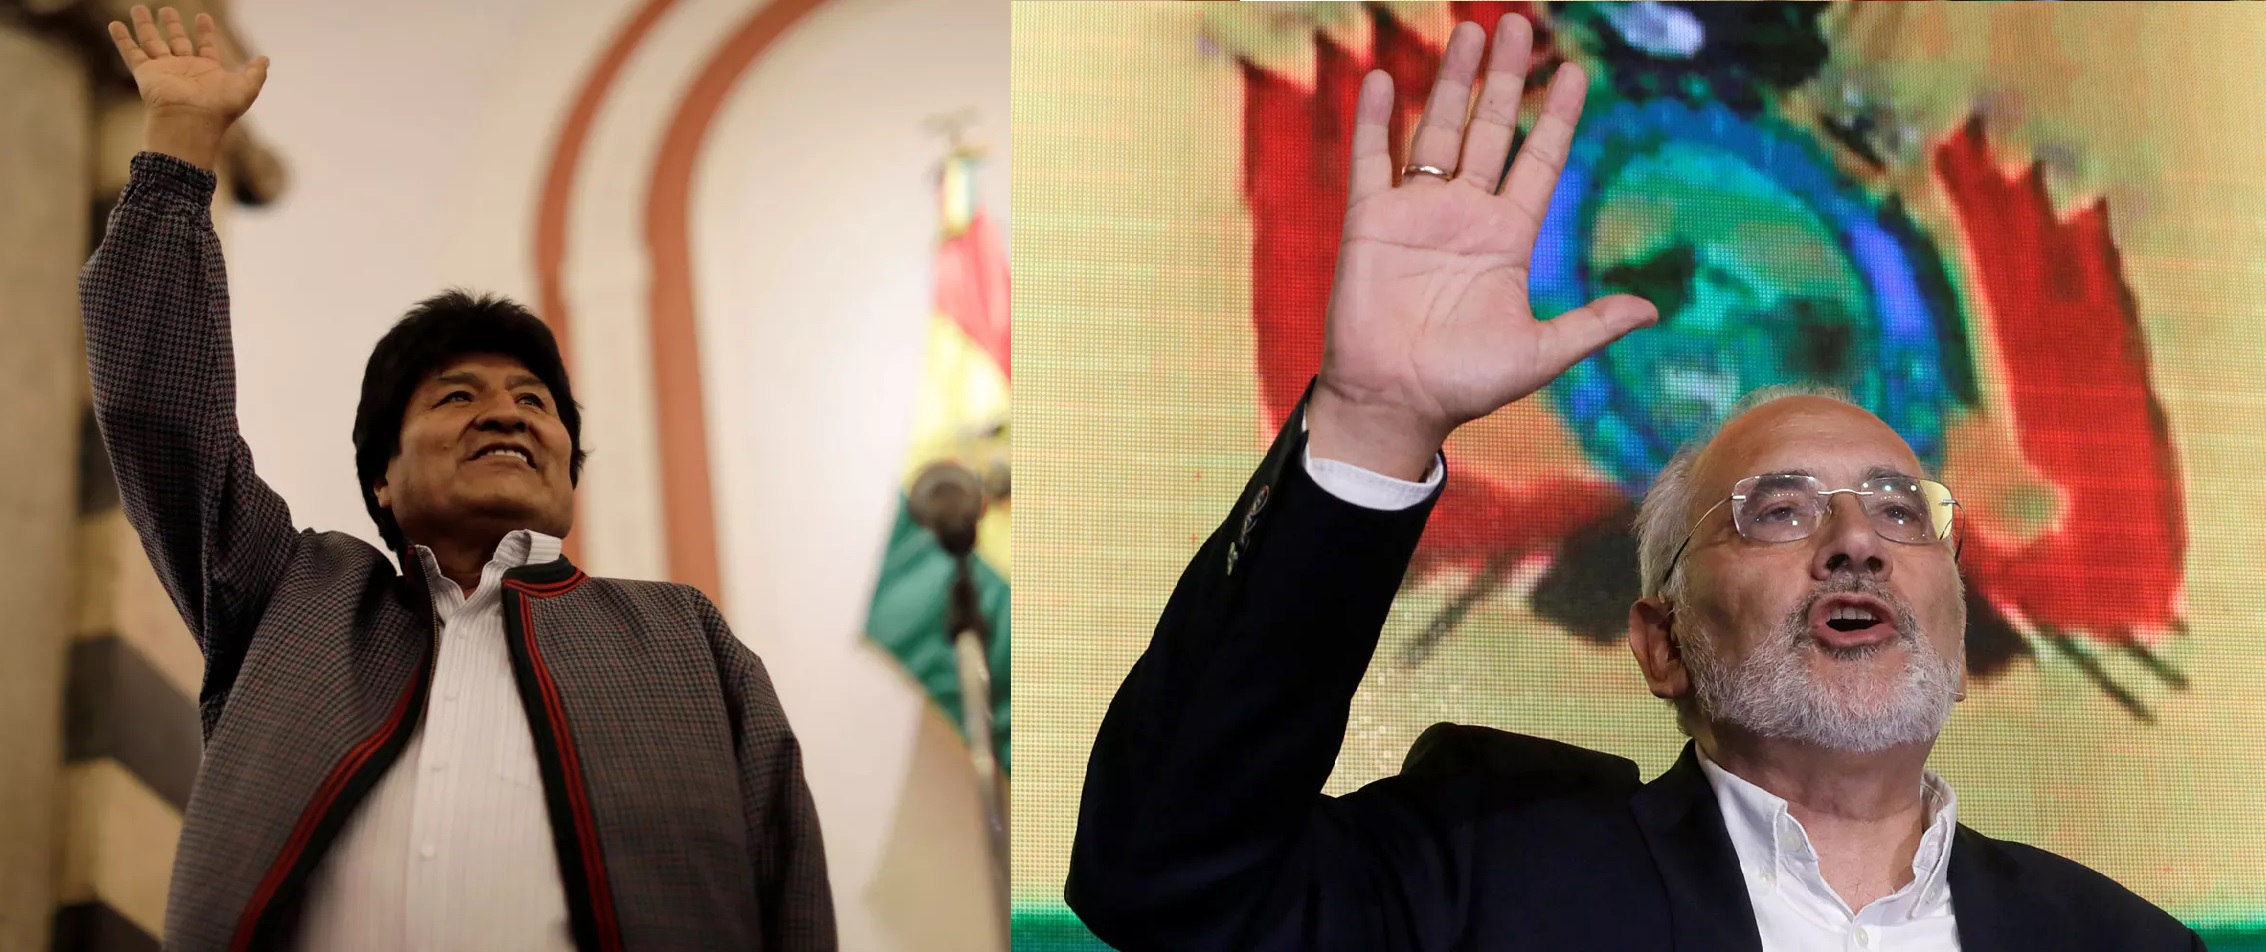 Eleição presidencial na Bolívia deve ter segundo turno entre Evo Morales e Carlos Mesa